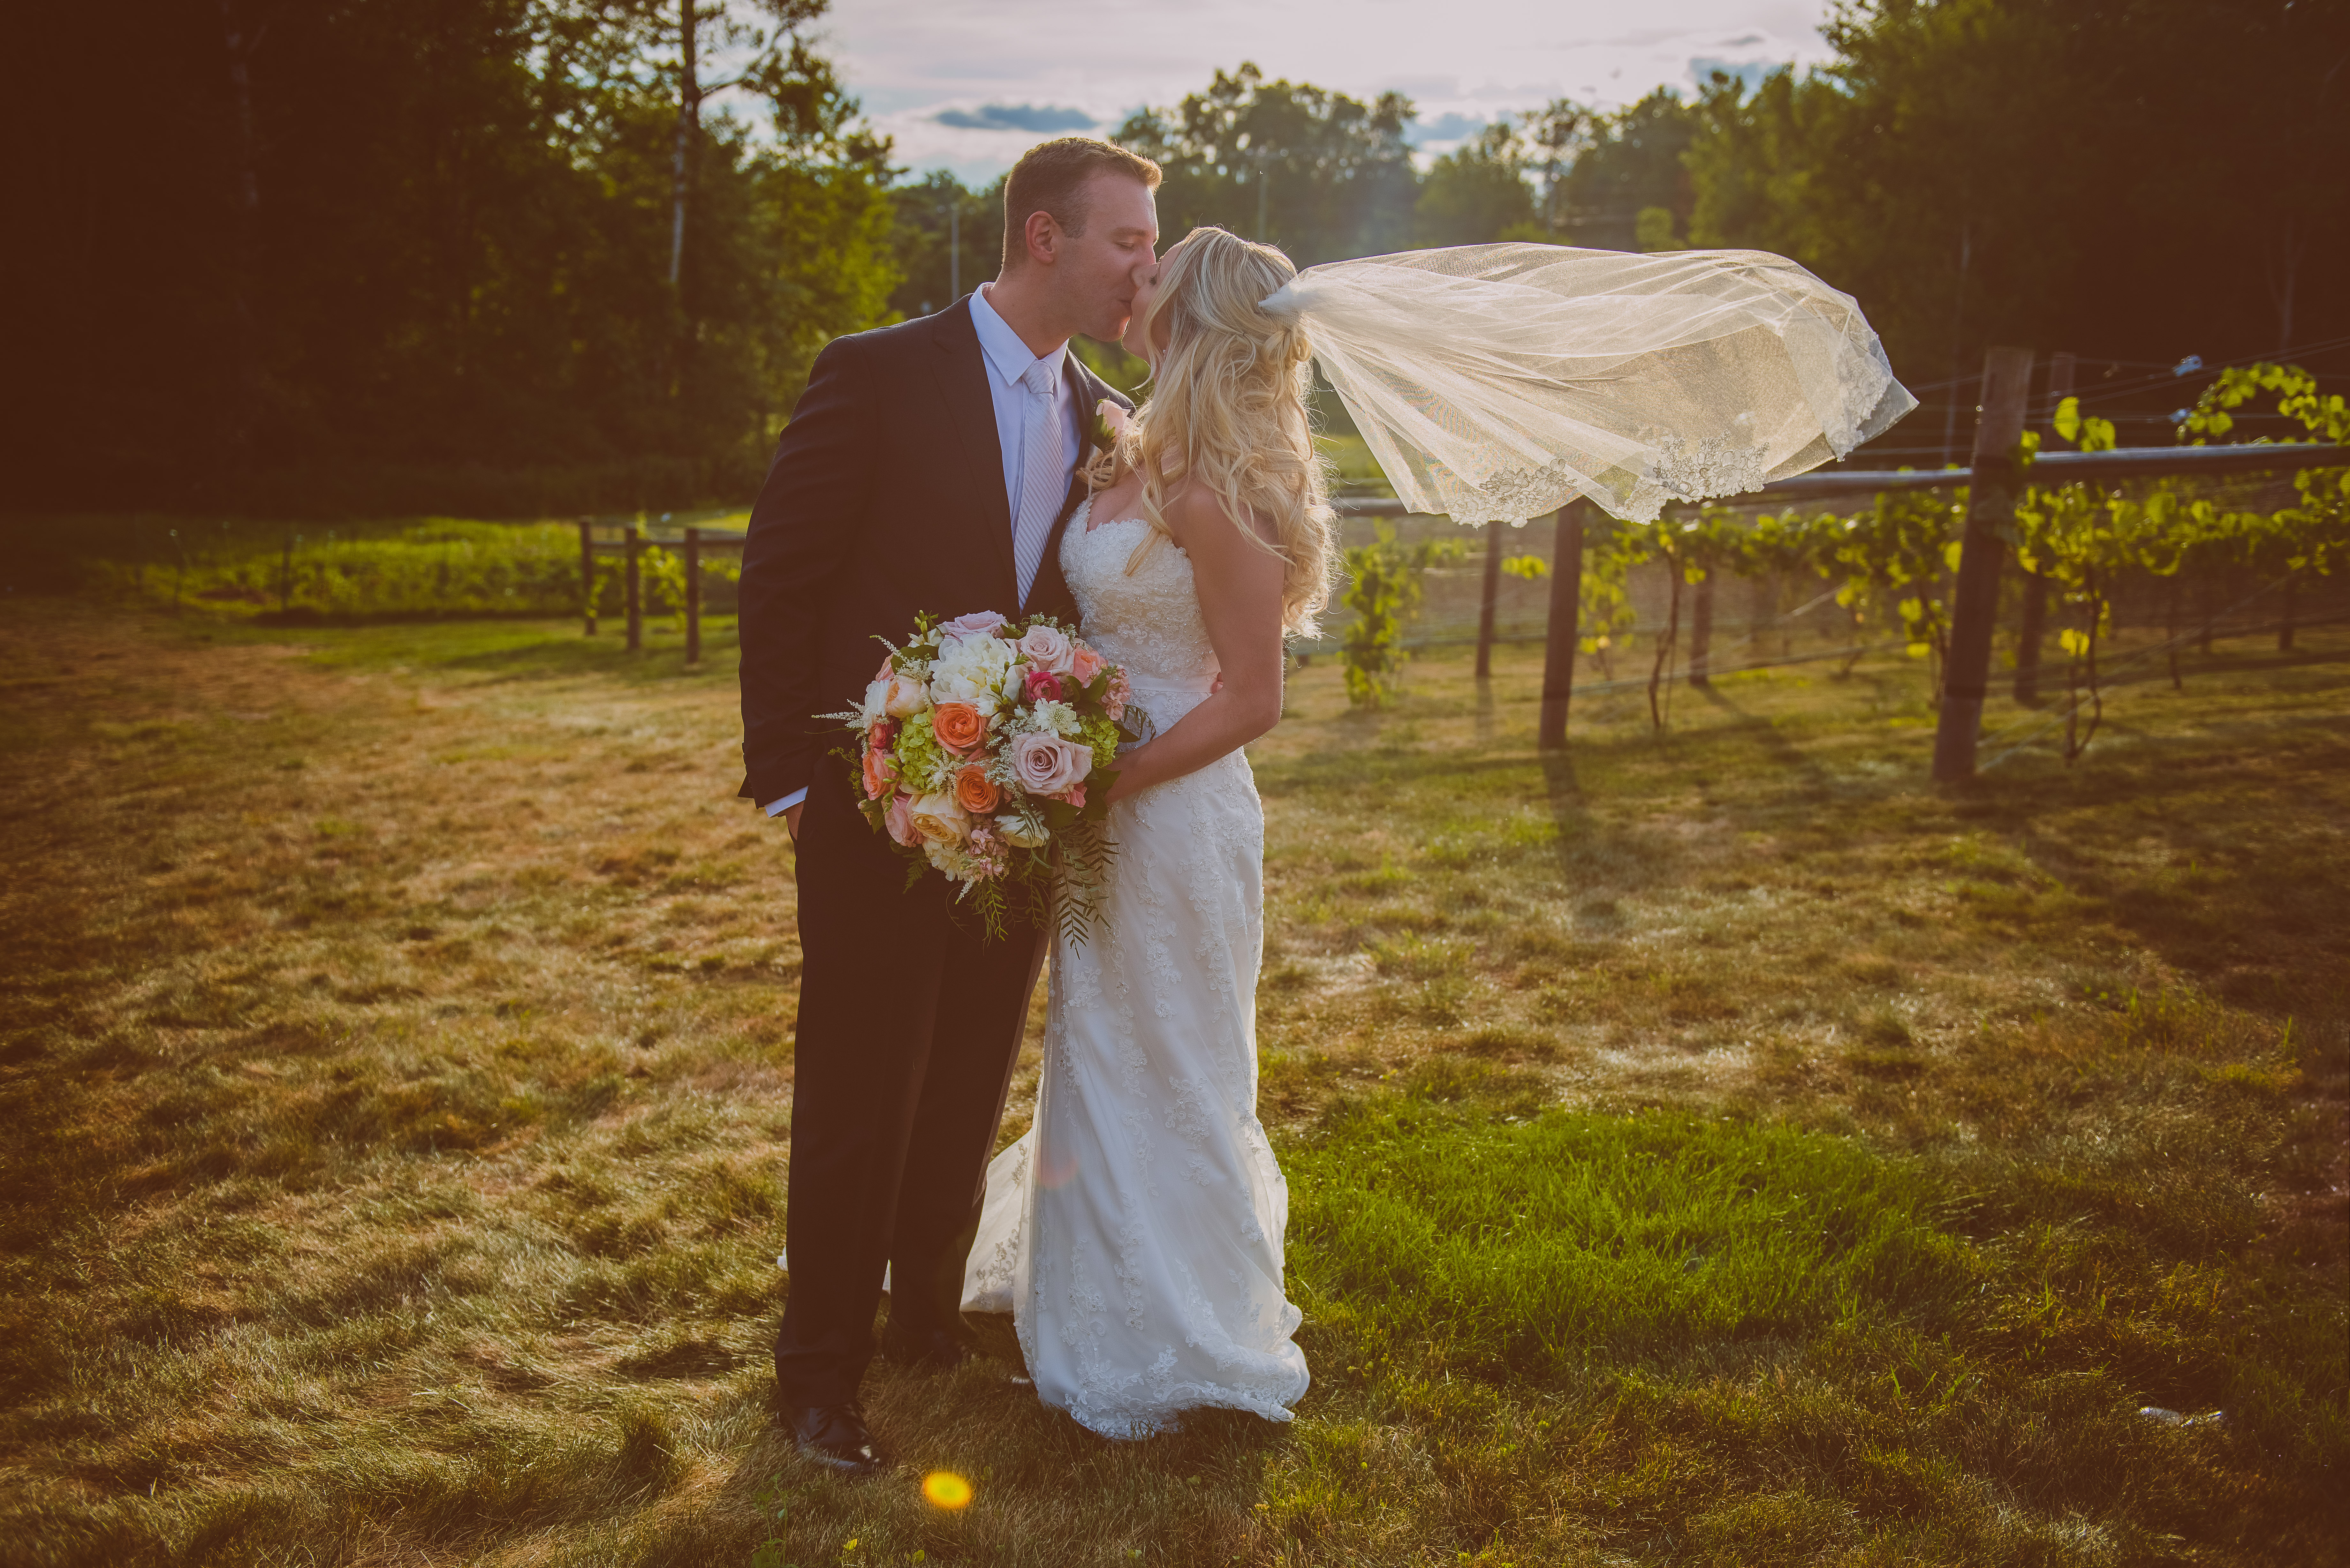 Kristen and Mike vineyard wedding in New Hampshire | Wedding Photography by Marina Zinovyeva